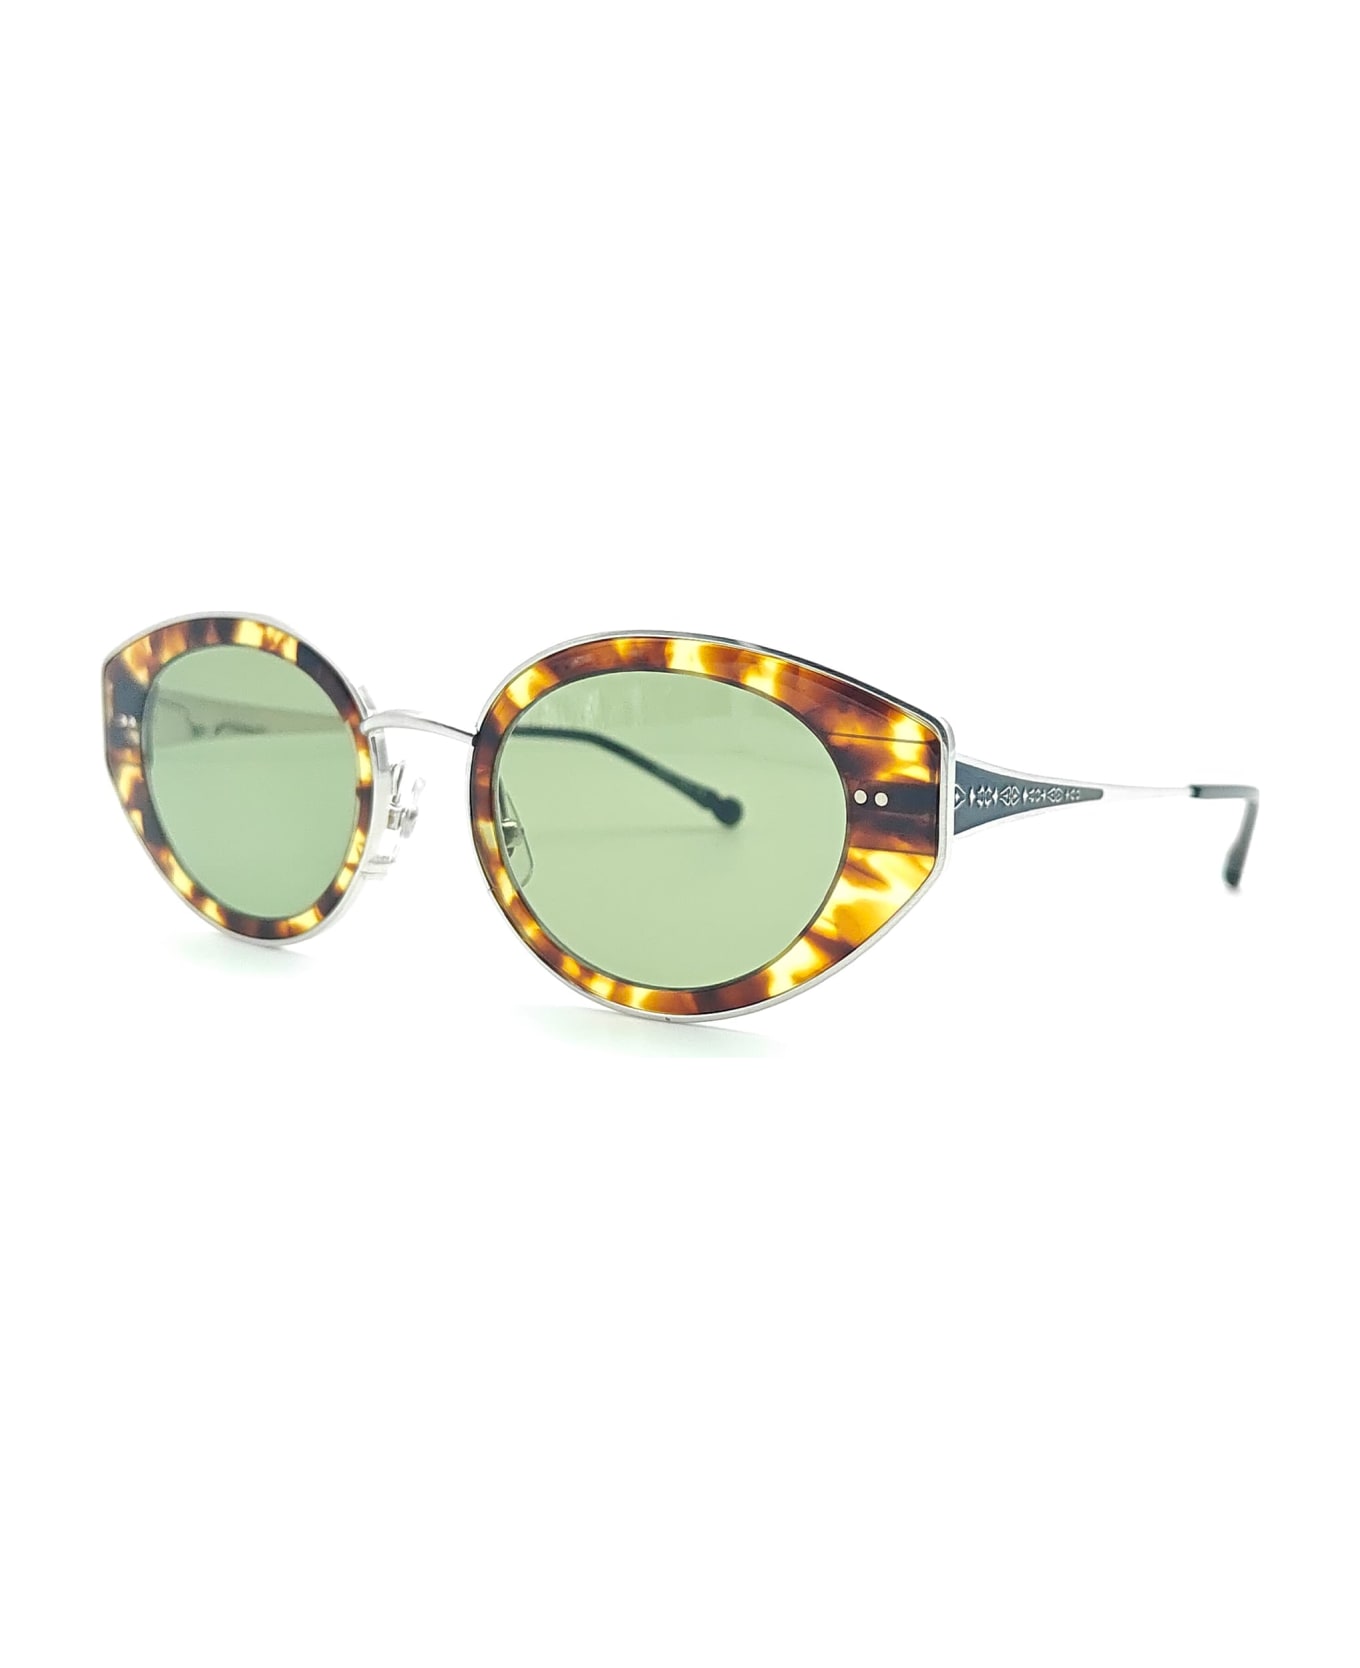 Matsuda M3120 - Tortoise / Brushed Silver Sunglasses - Tortoise/silver サングラス